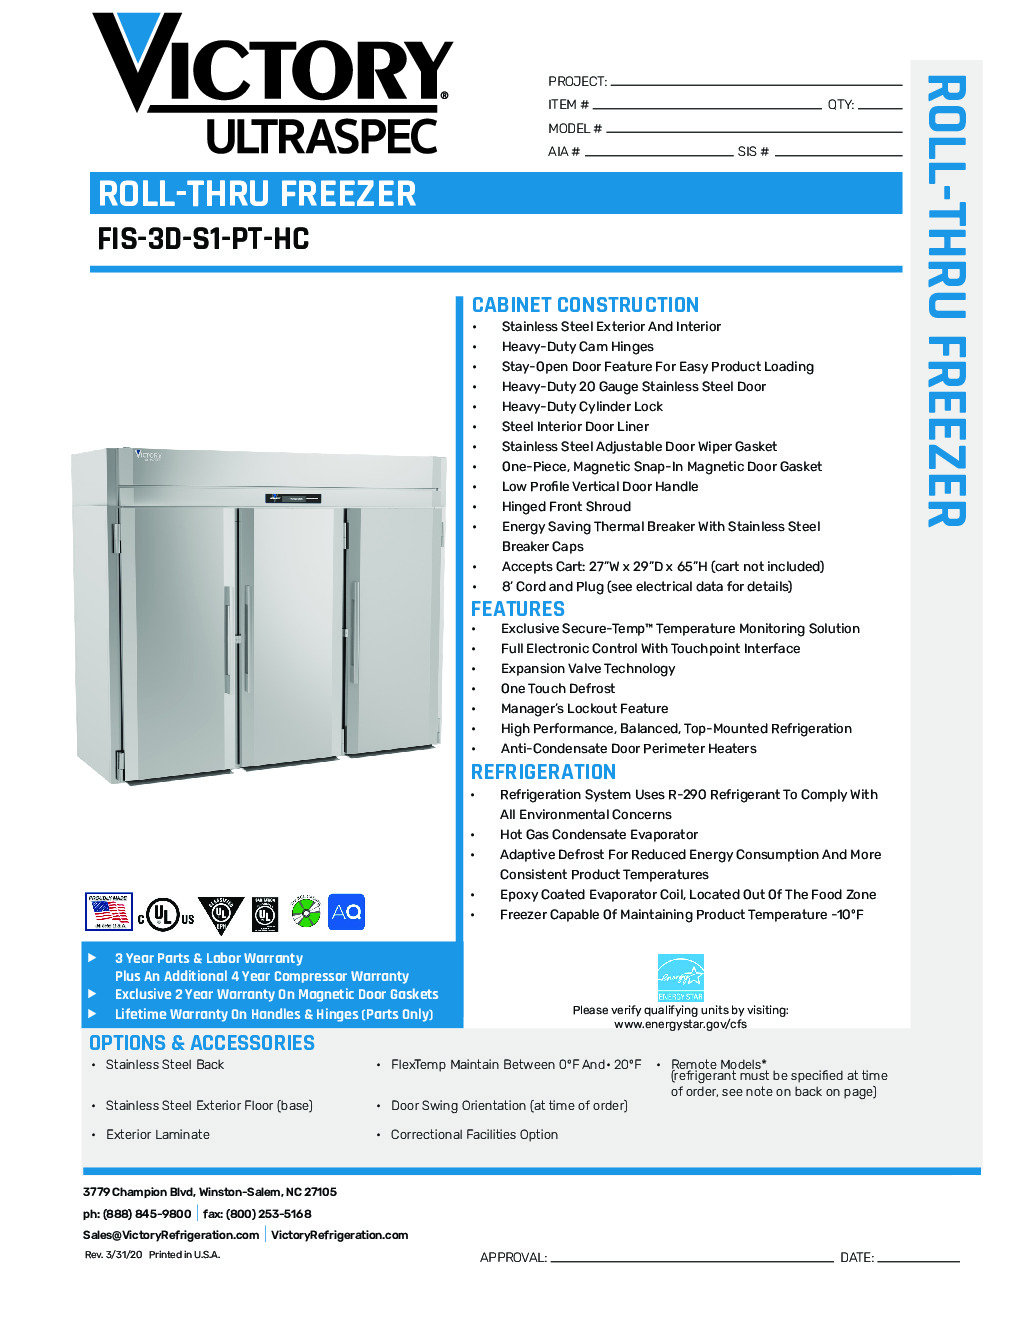 Victory FIS-3D-S1-PT-HC Roll-Thru Freezer